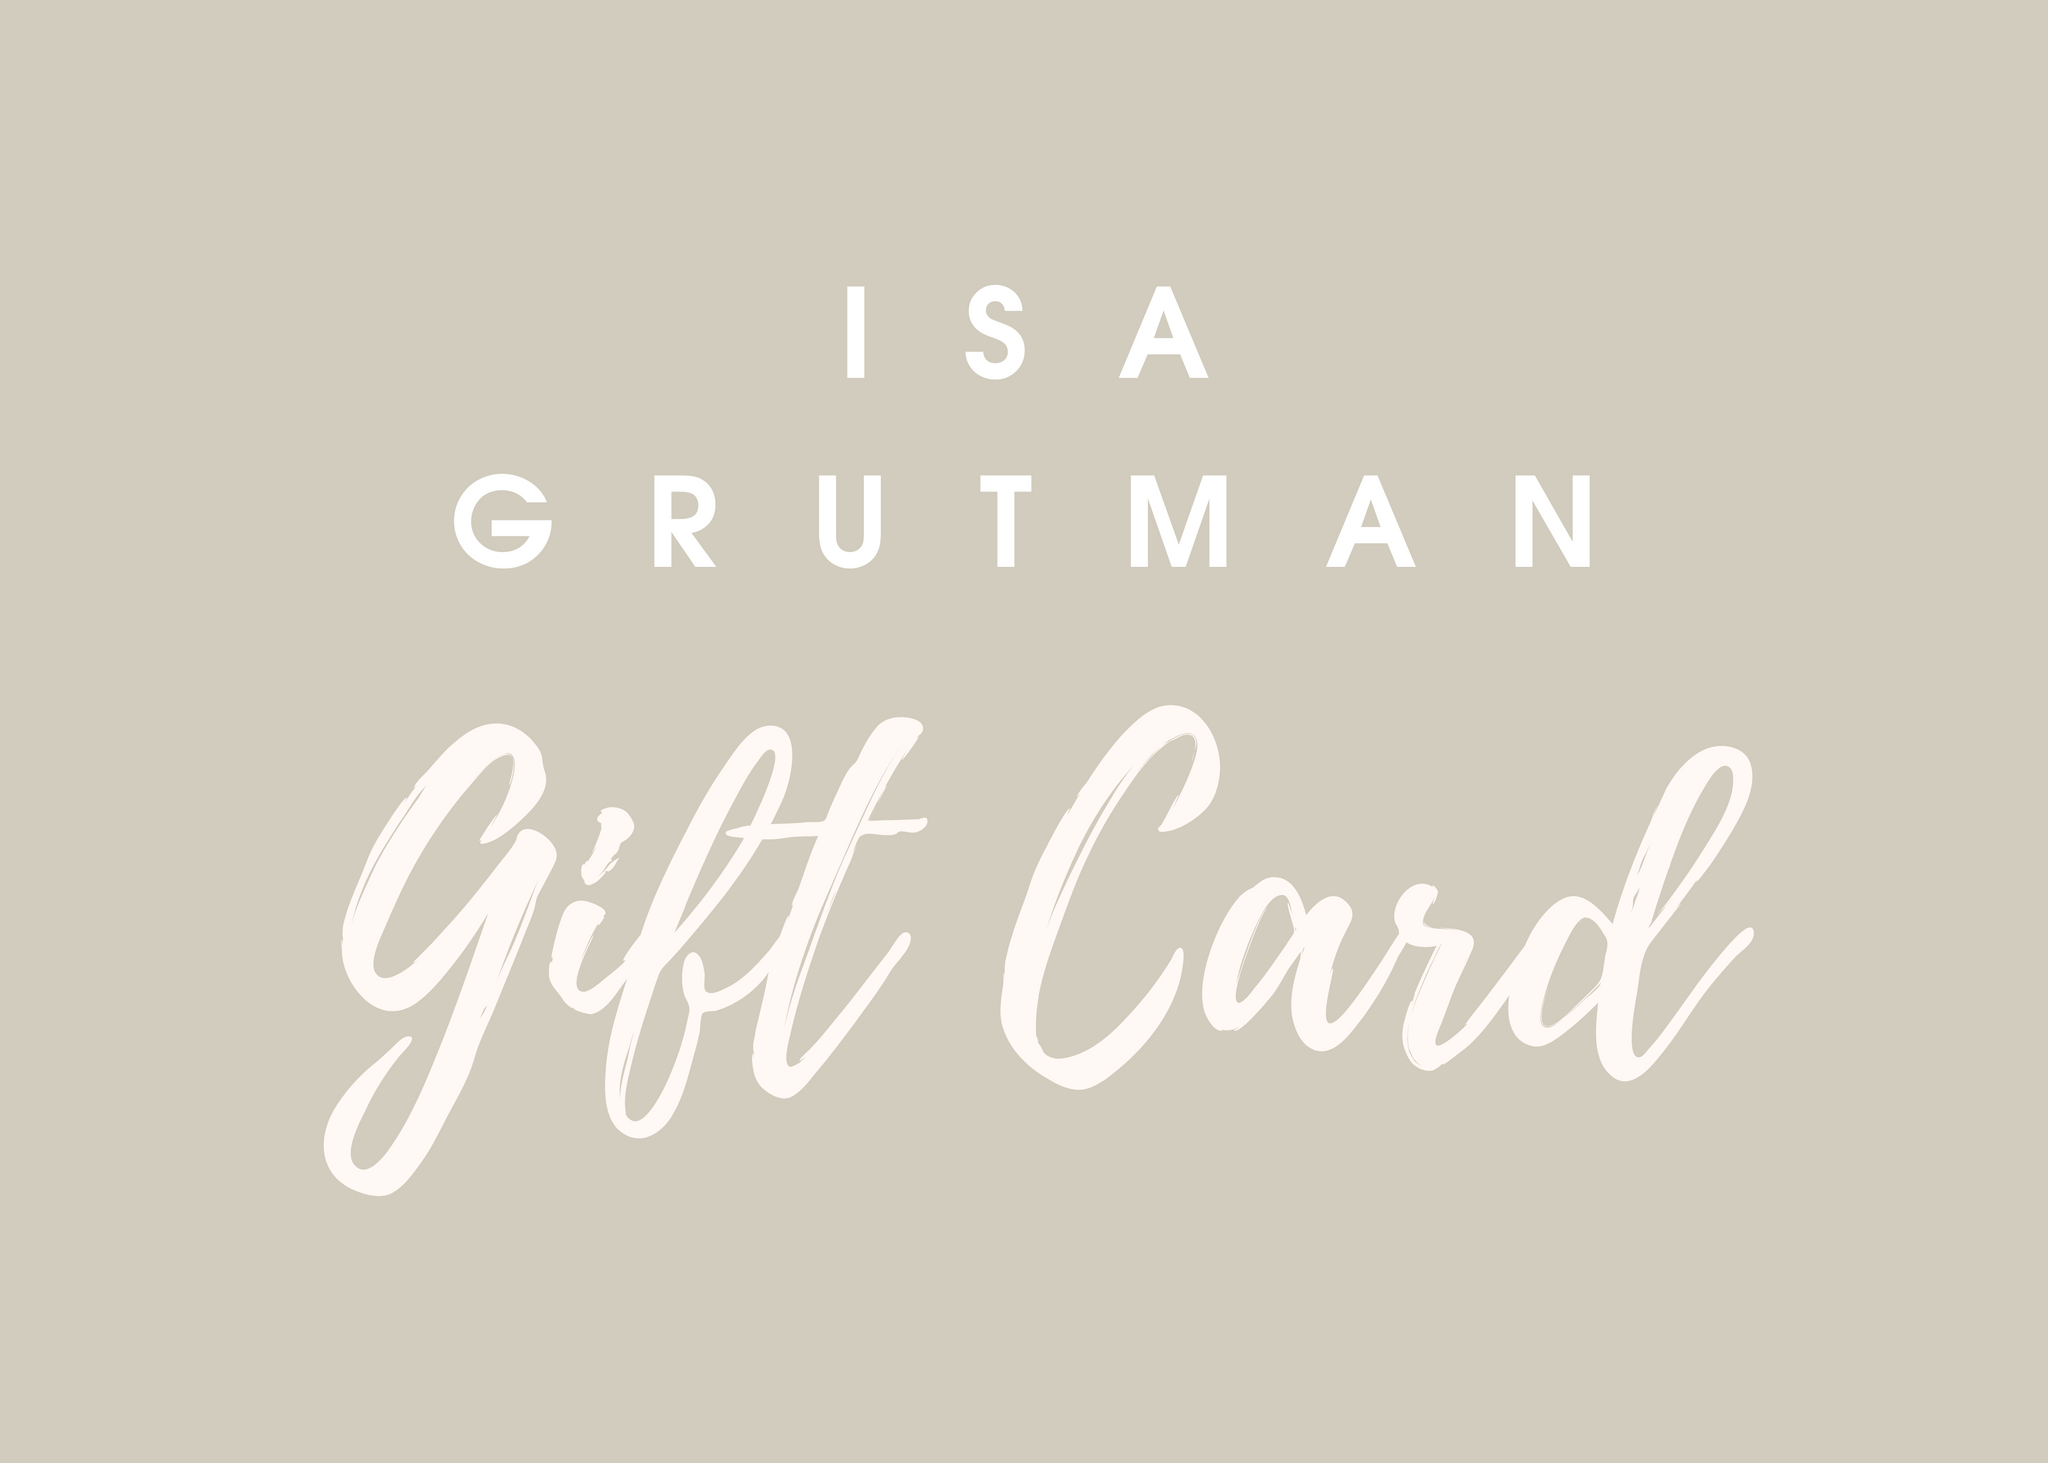 Isa Grutman Gift Card